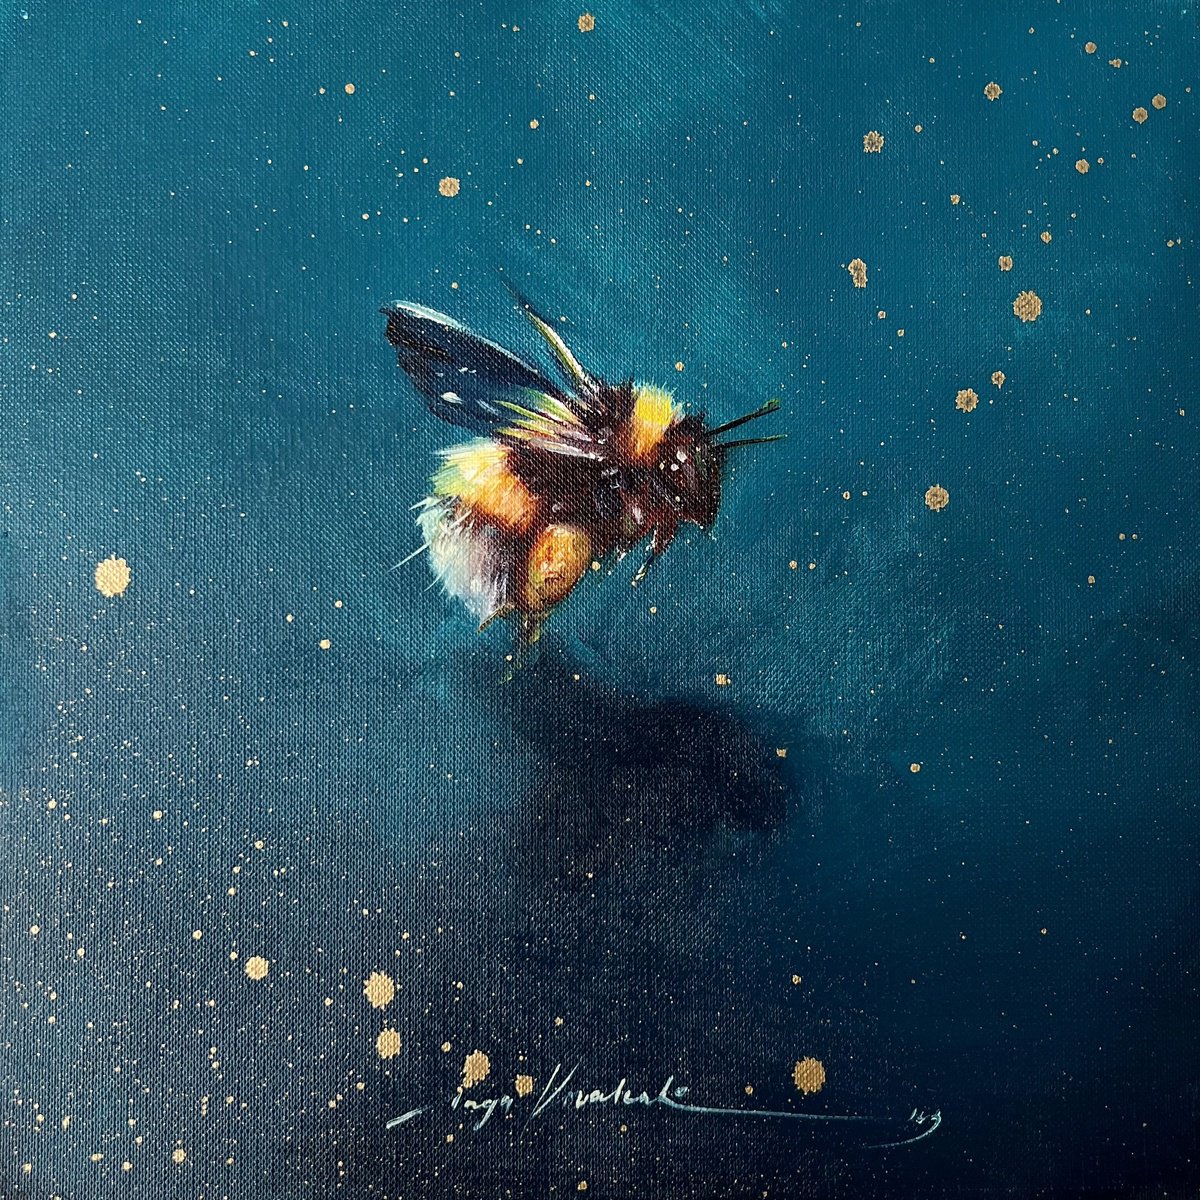 This is a honey bumblebee in flight by Inga Kovalenko